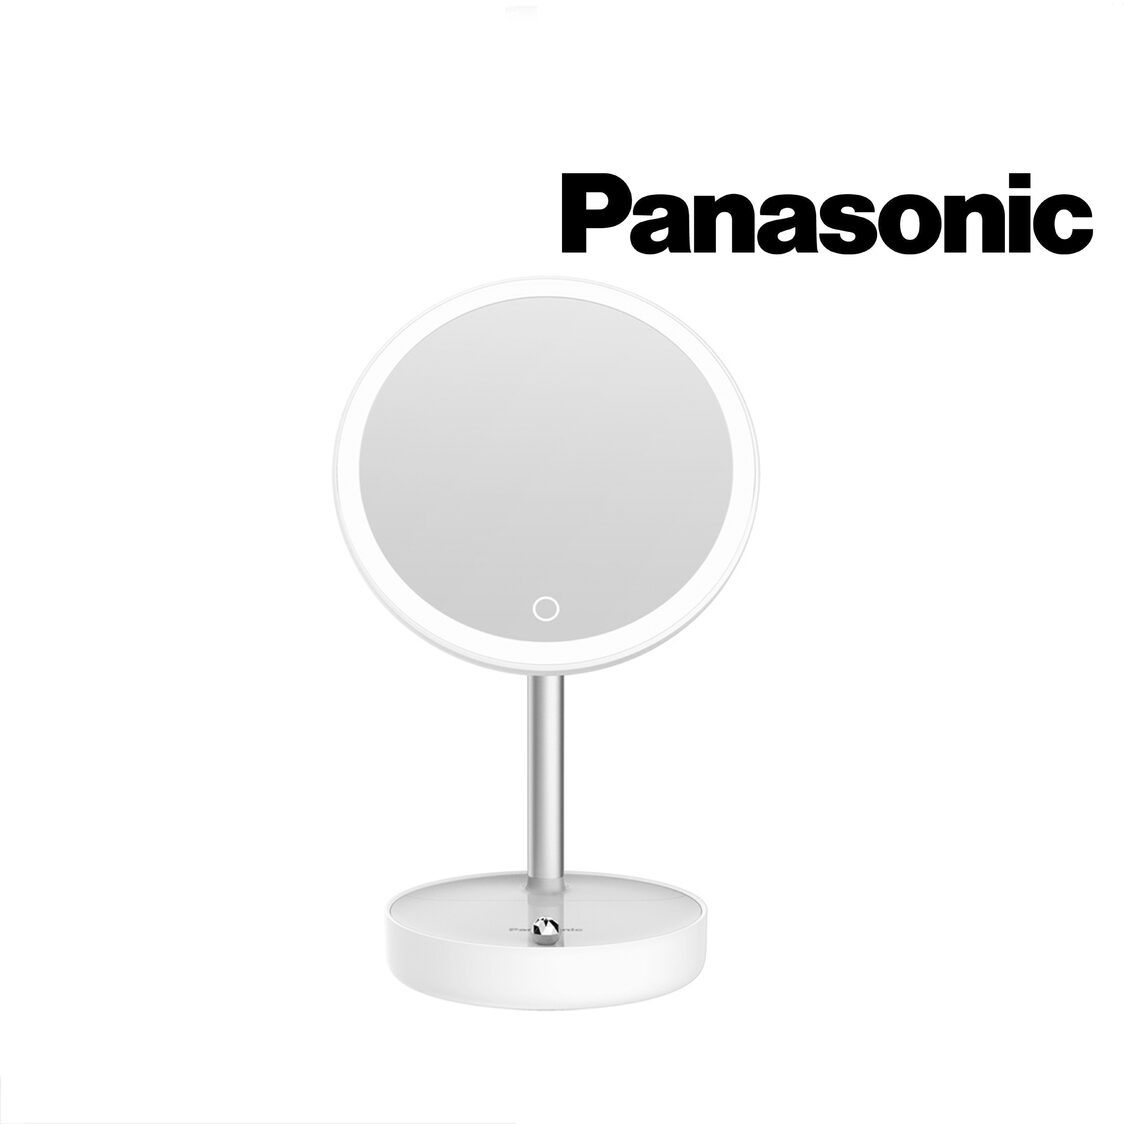 PANASONIC LED Mirror Make Up Light with Storage 4.5W, White